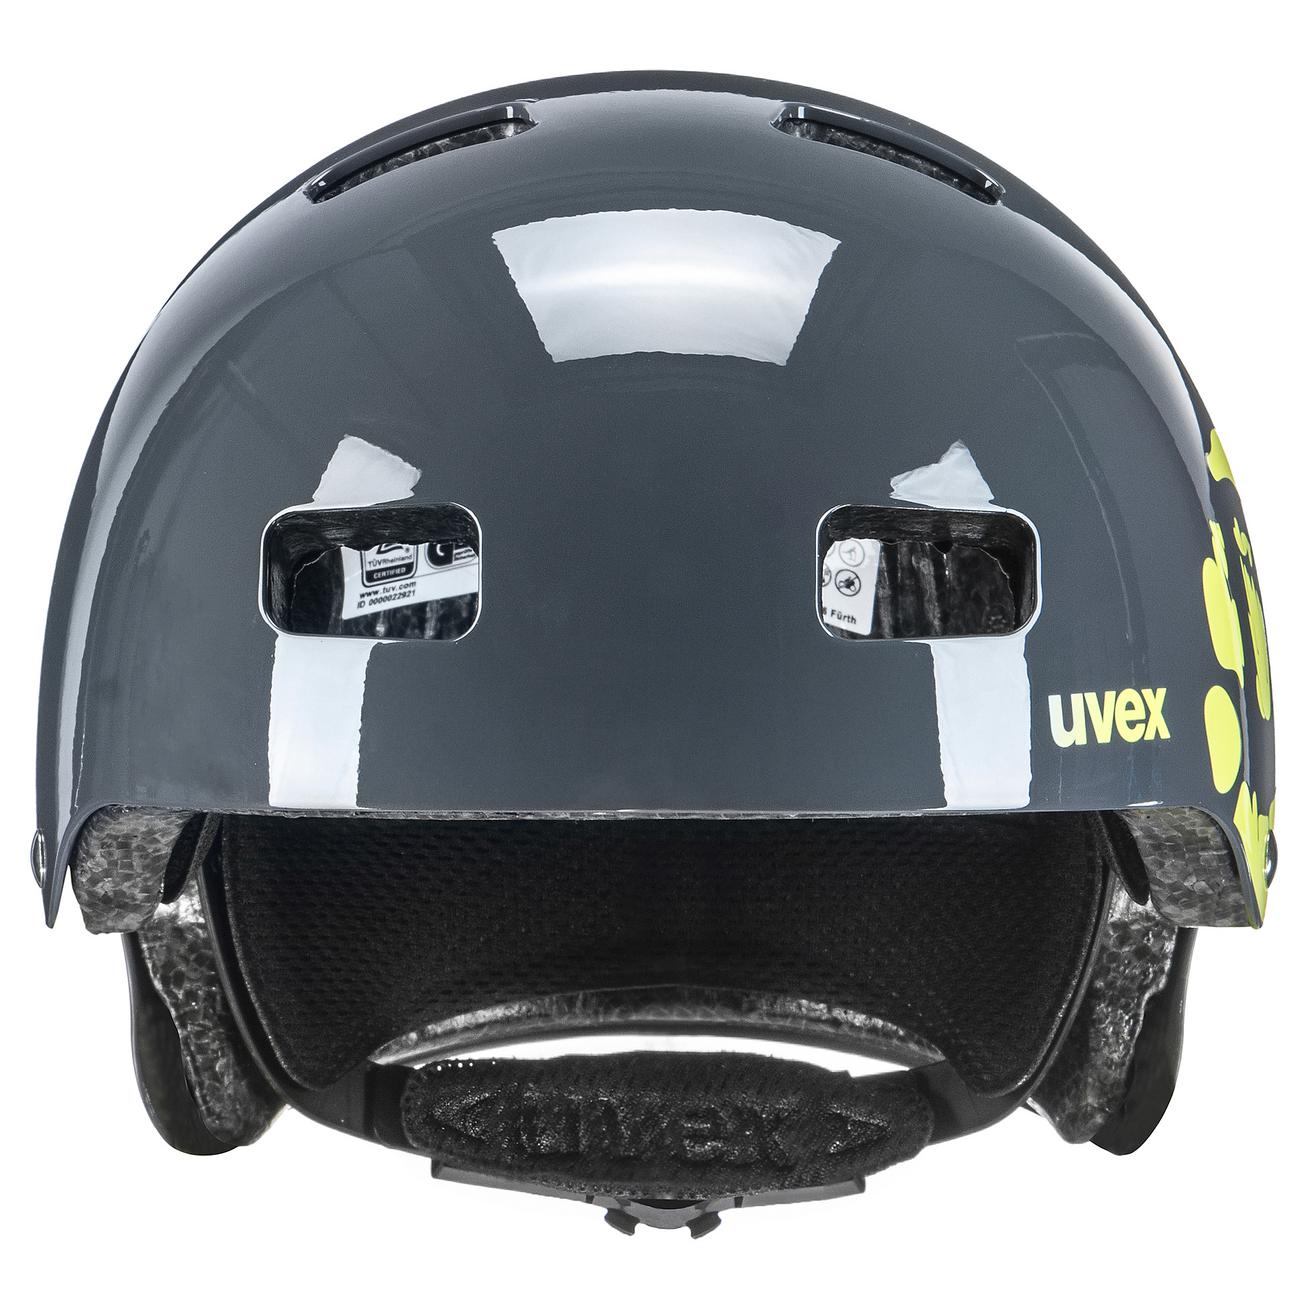 Uvex Kid 3 Dirtbike Grey Lime Bicycle Helmet Size 51-55 for Stevens Giant KTM etc. 